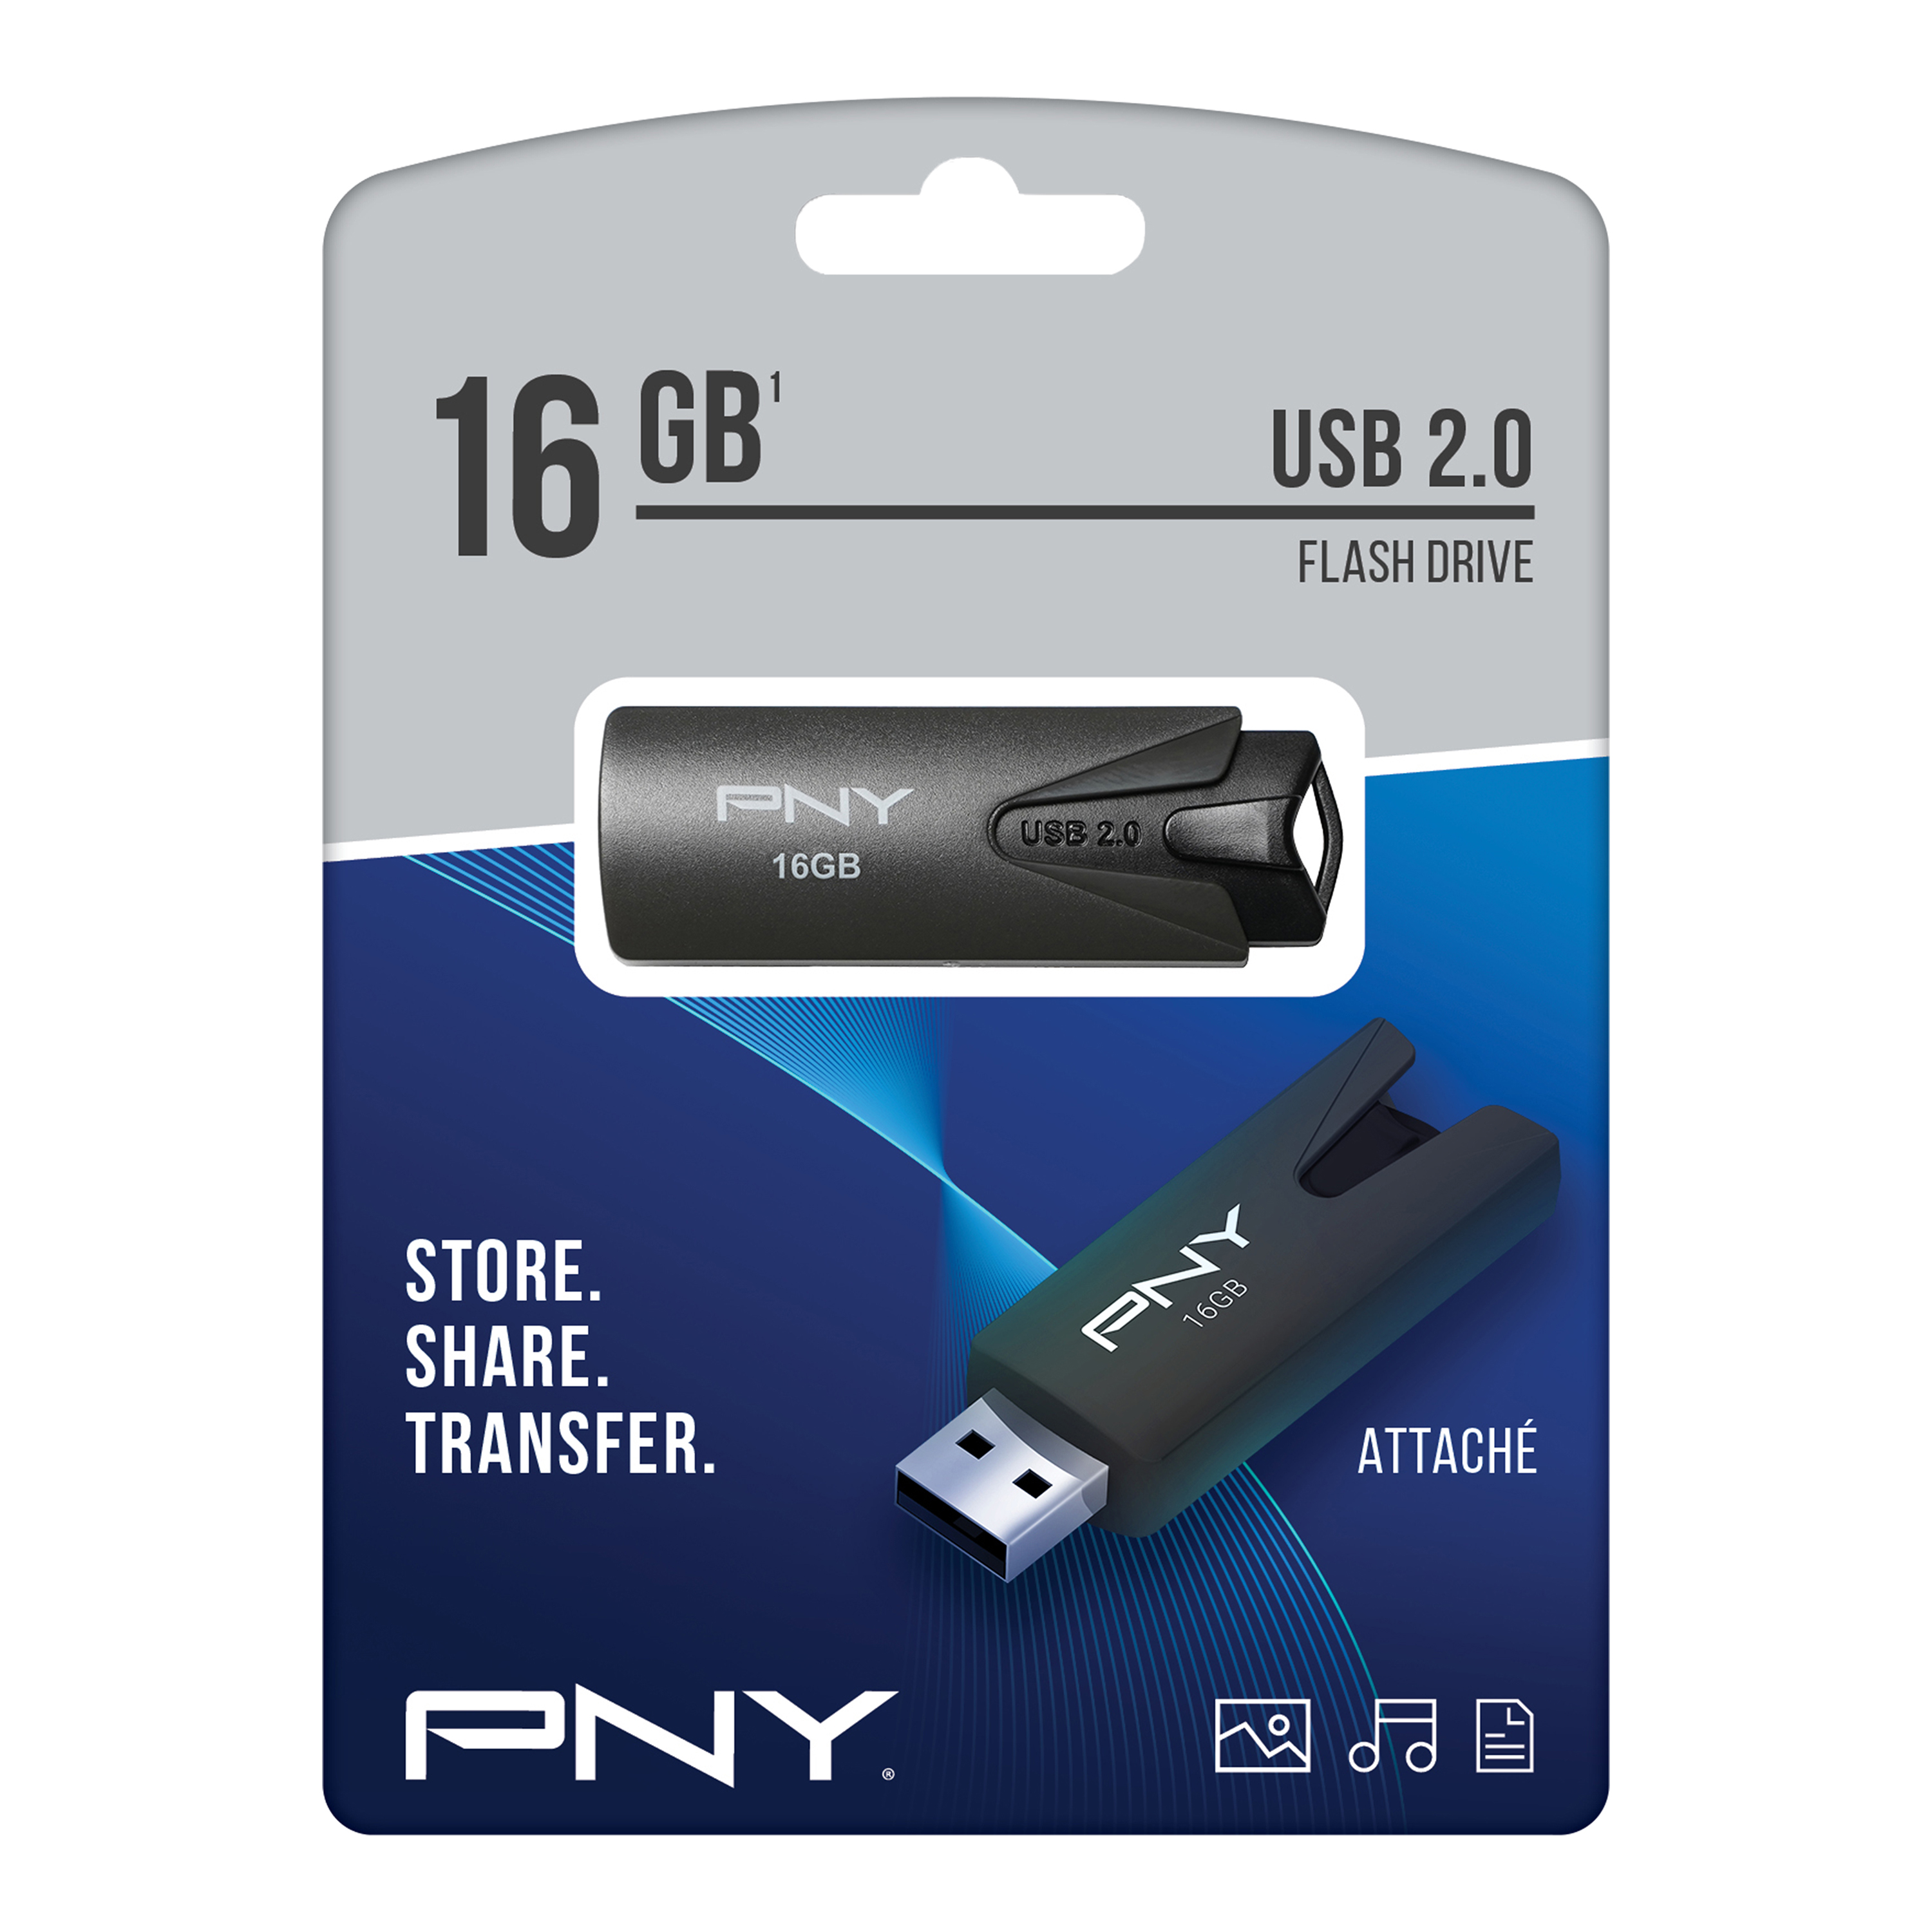 PNY 16GB Attache USB 2.0 Flash Drive - image 4 of 8